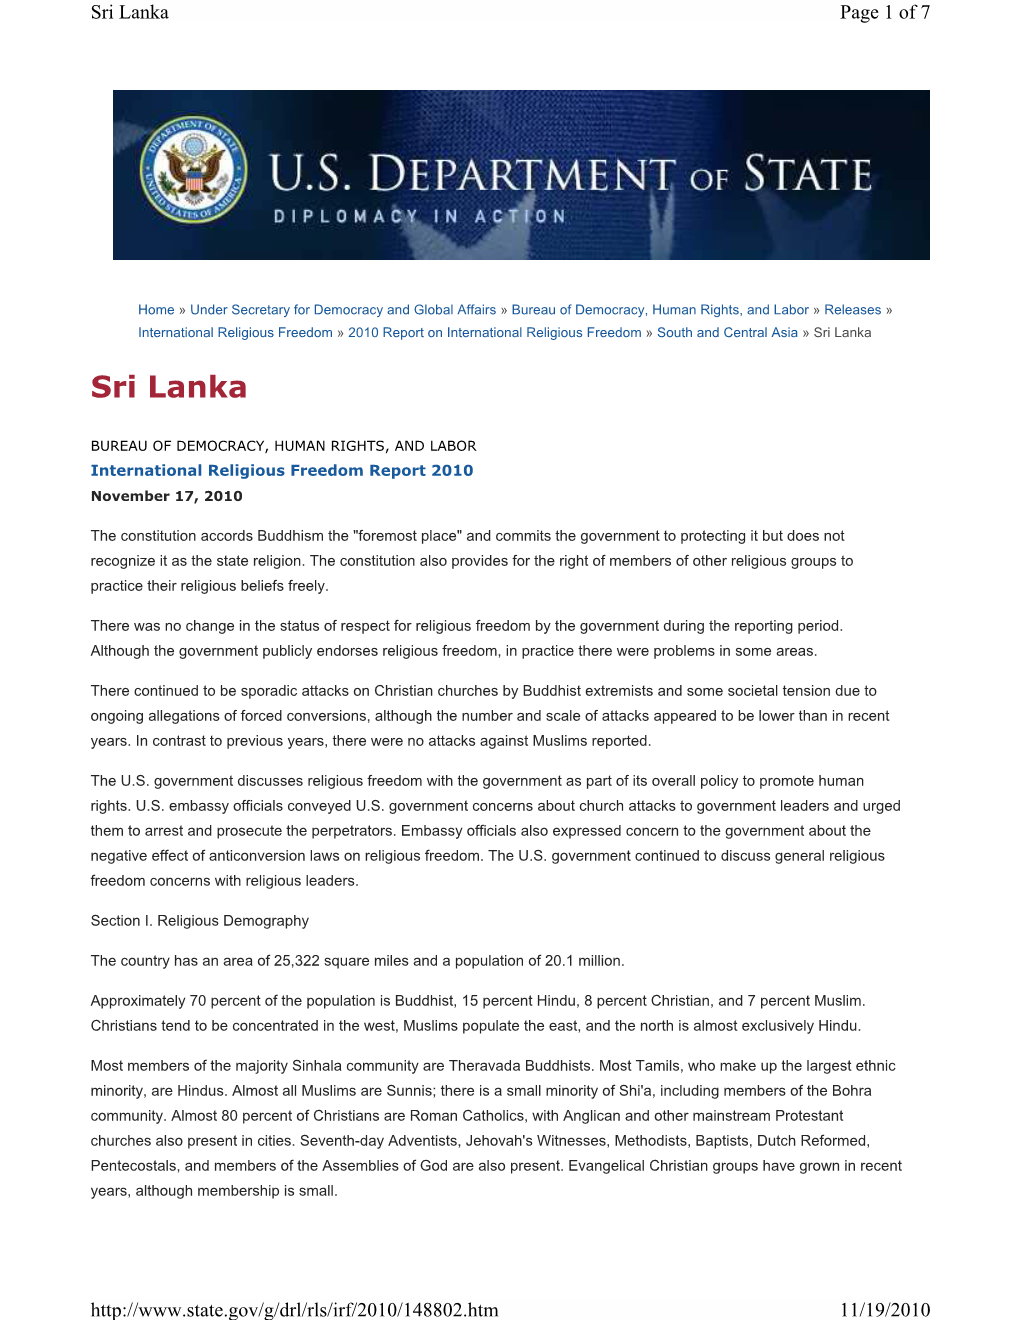 Report on International Religious Freedom 2010: Sri Lanka